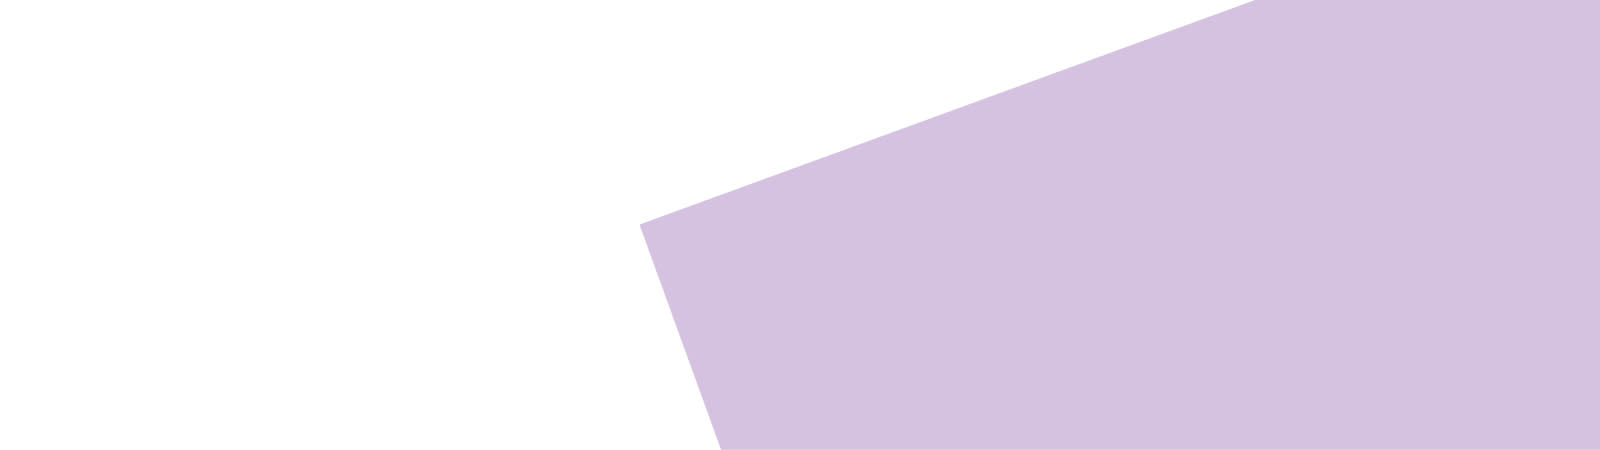 satch-card-bkg-light-purple-xs